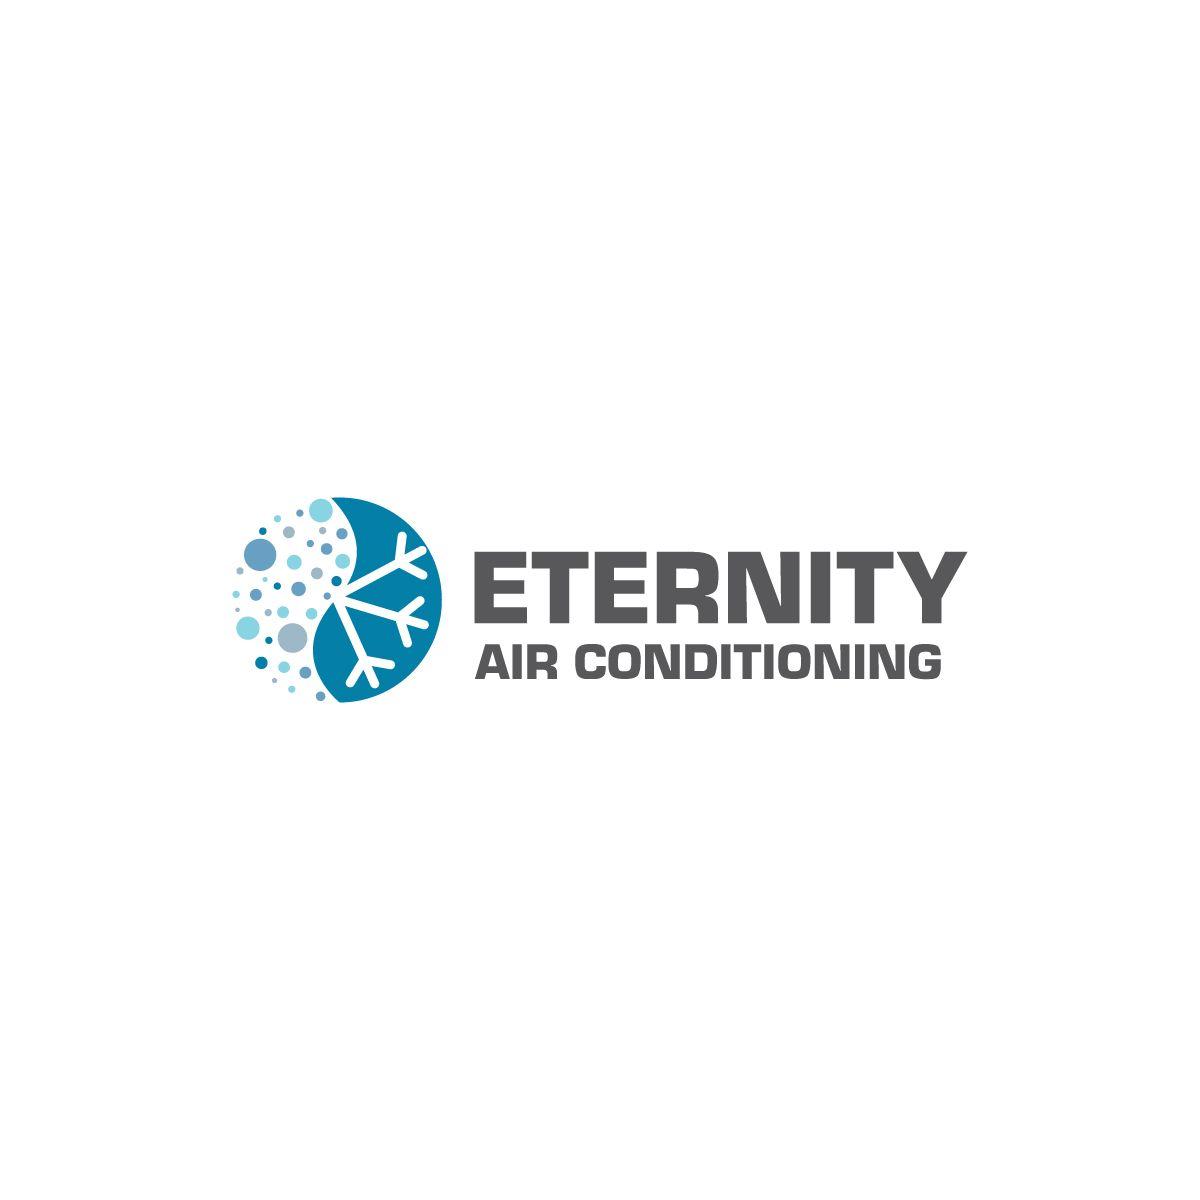 Eternity Circle Logo - Modern, Professional, Air Conditioning Logo Design for ETERNITY AIR